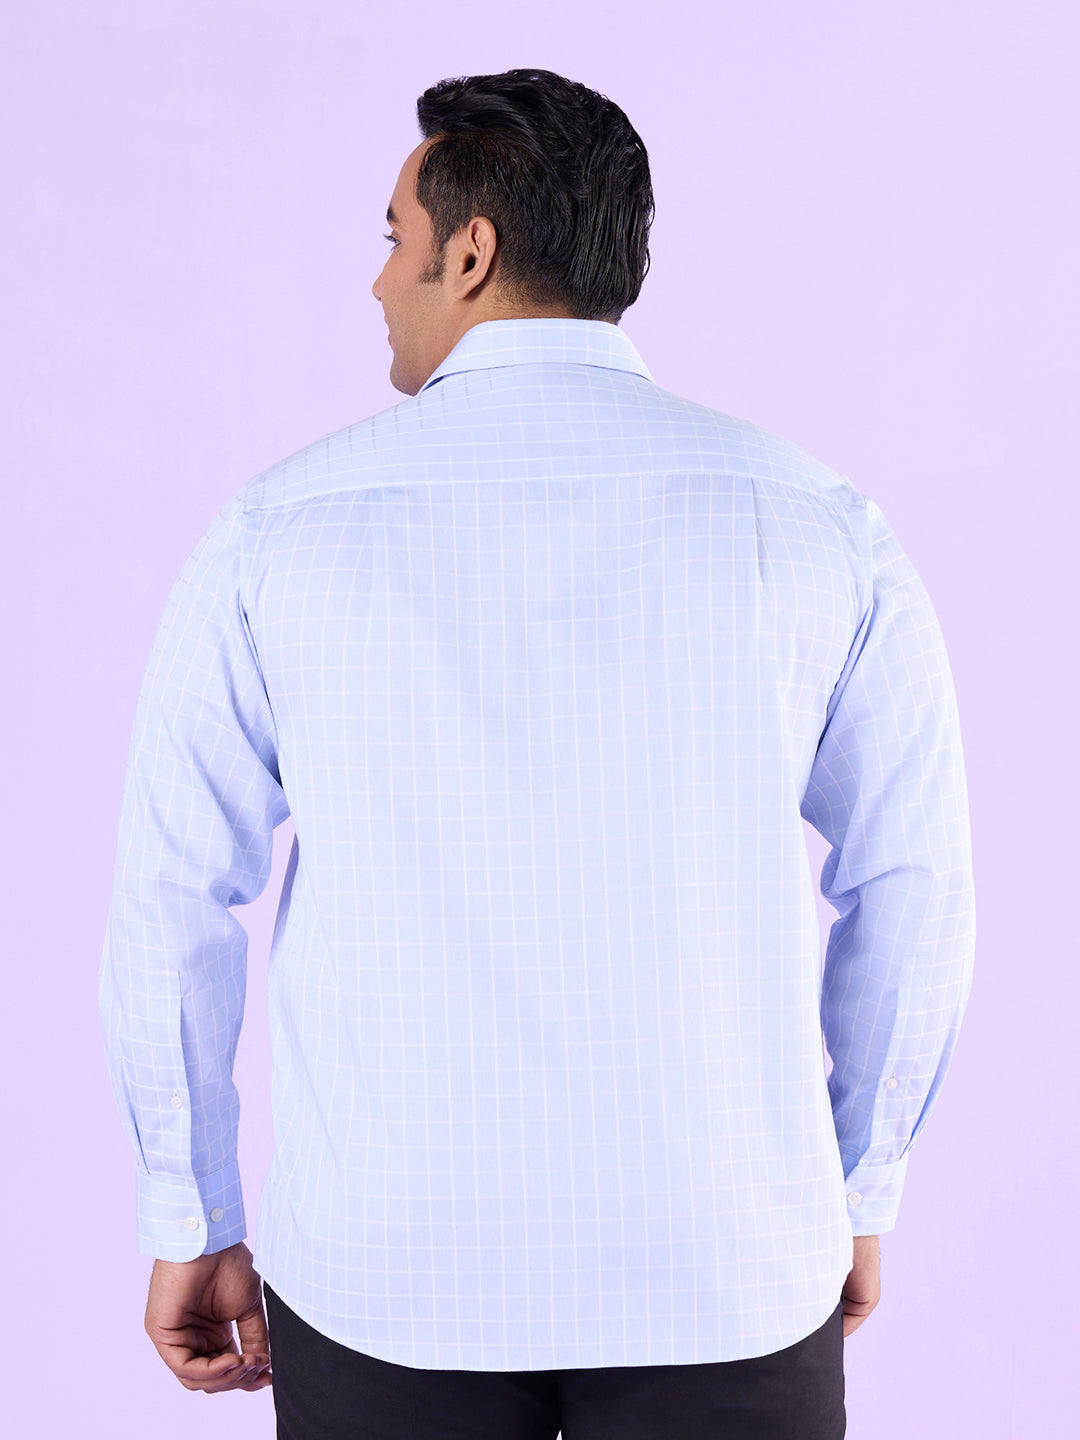 Sophisticated Supima Cotton Check Shirt